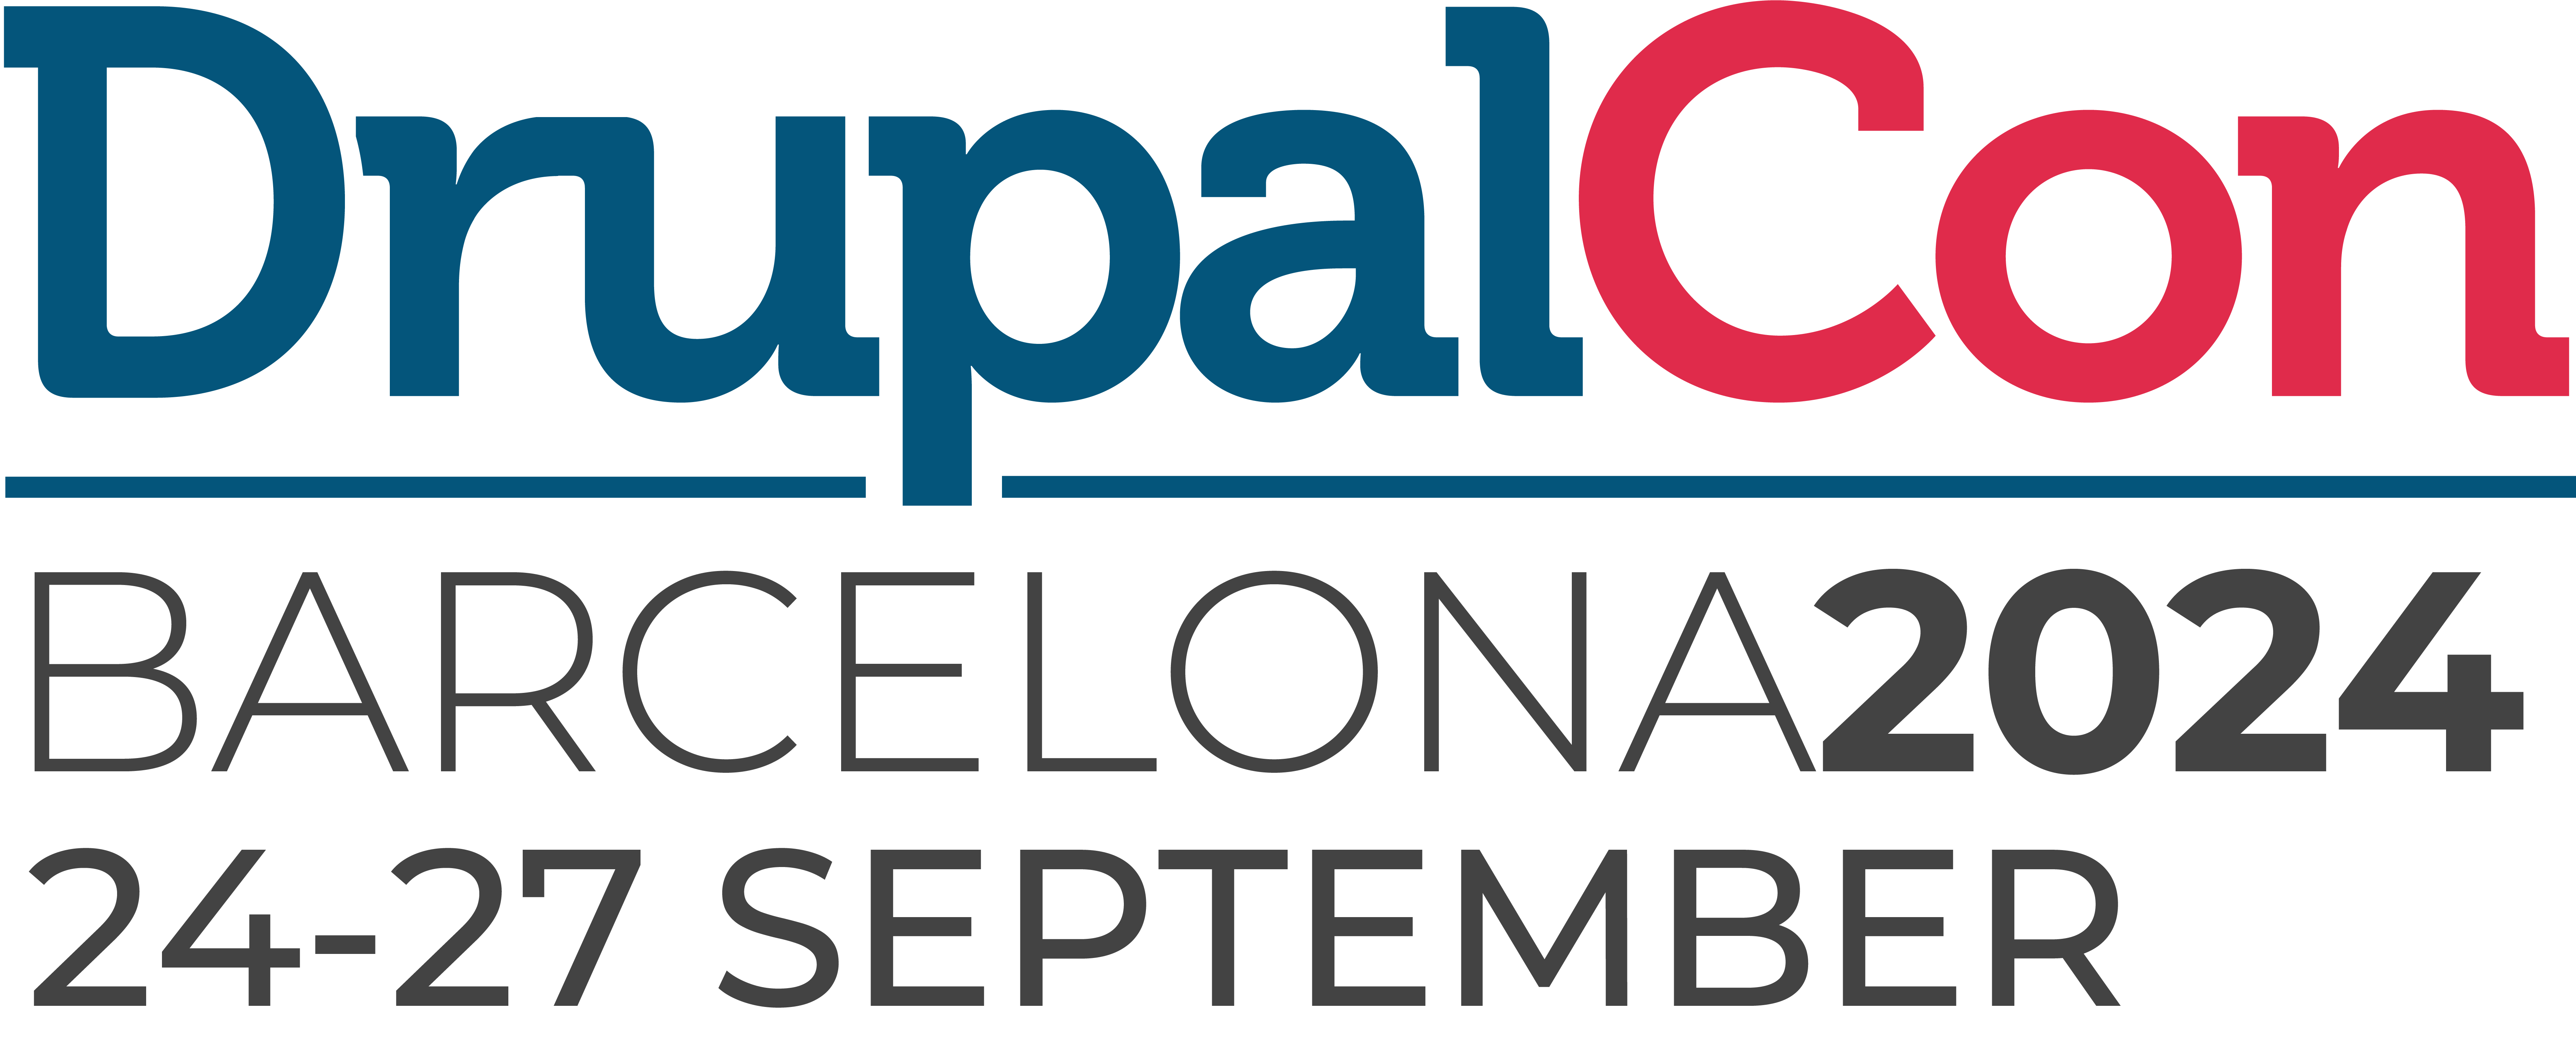 DrupalCon Barcelona logo